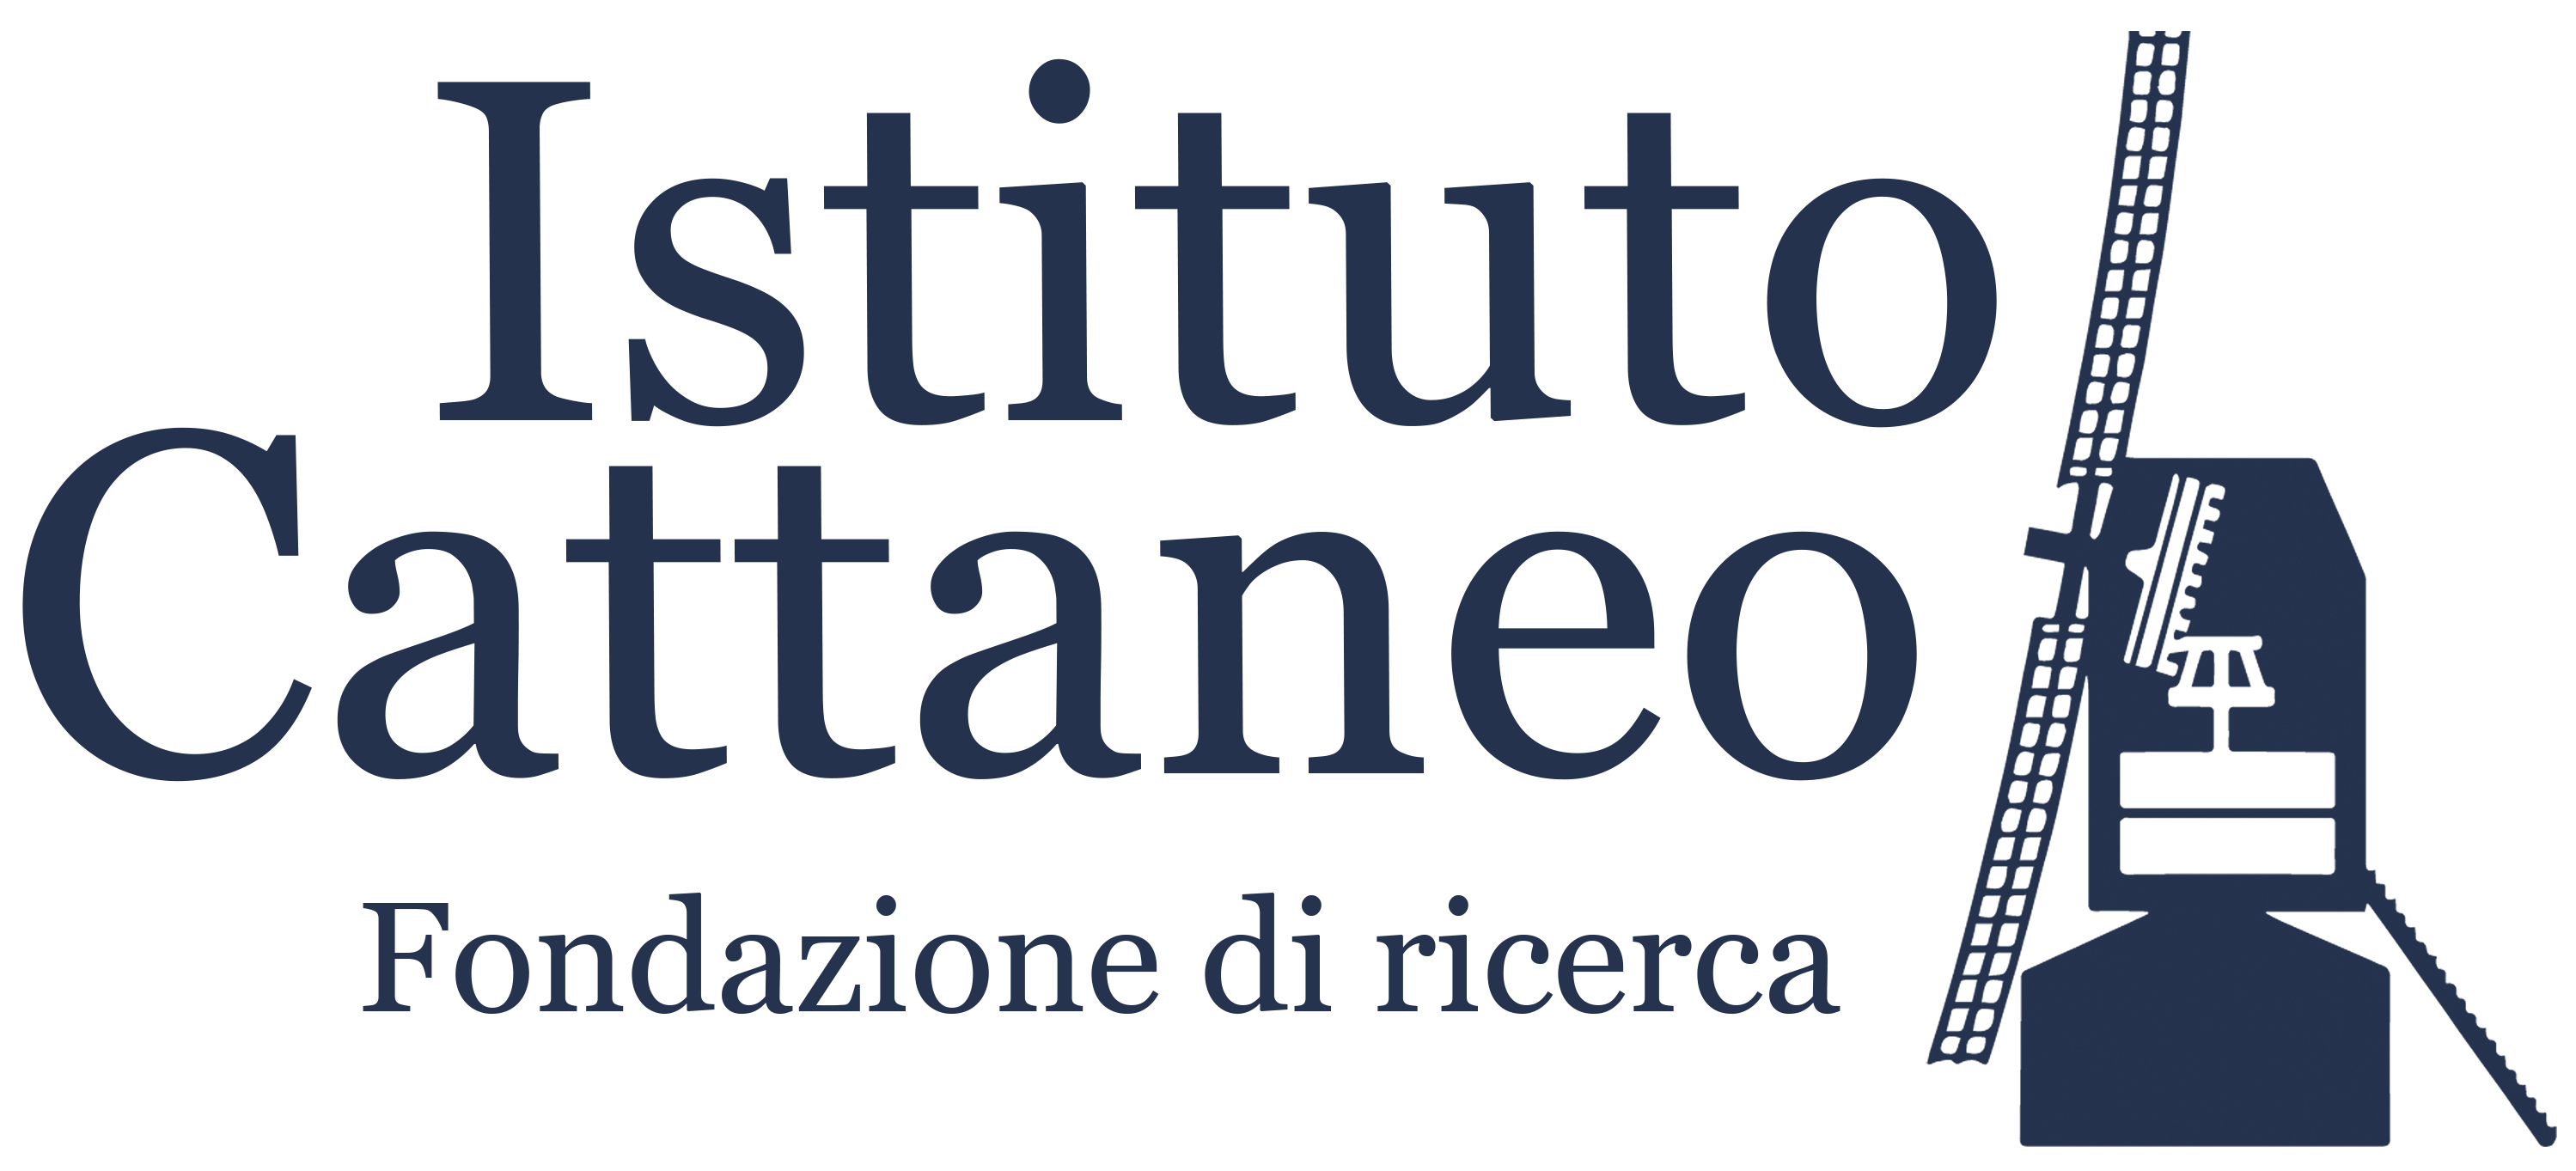 Istituto Cattaneo